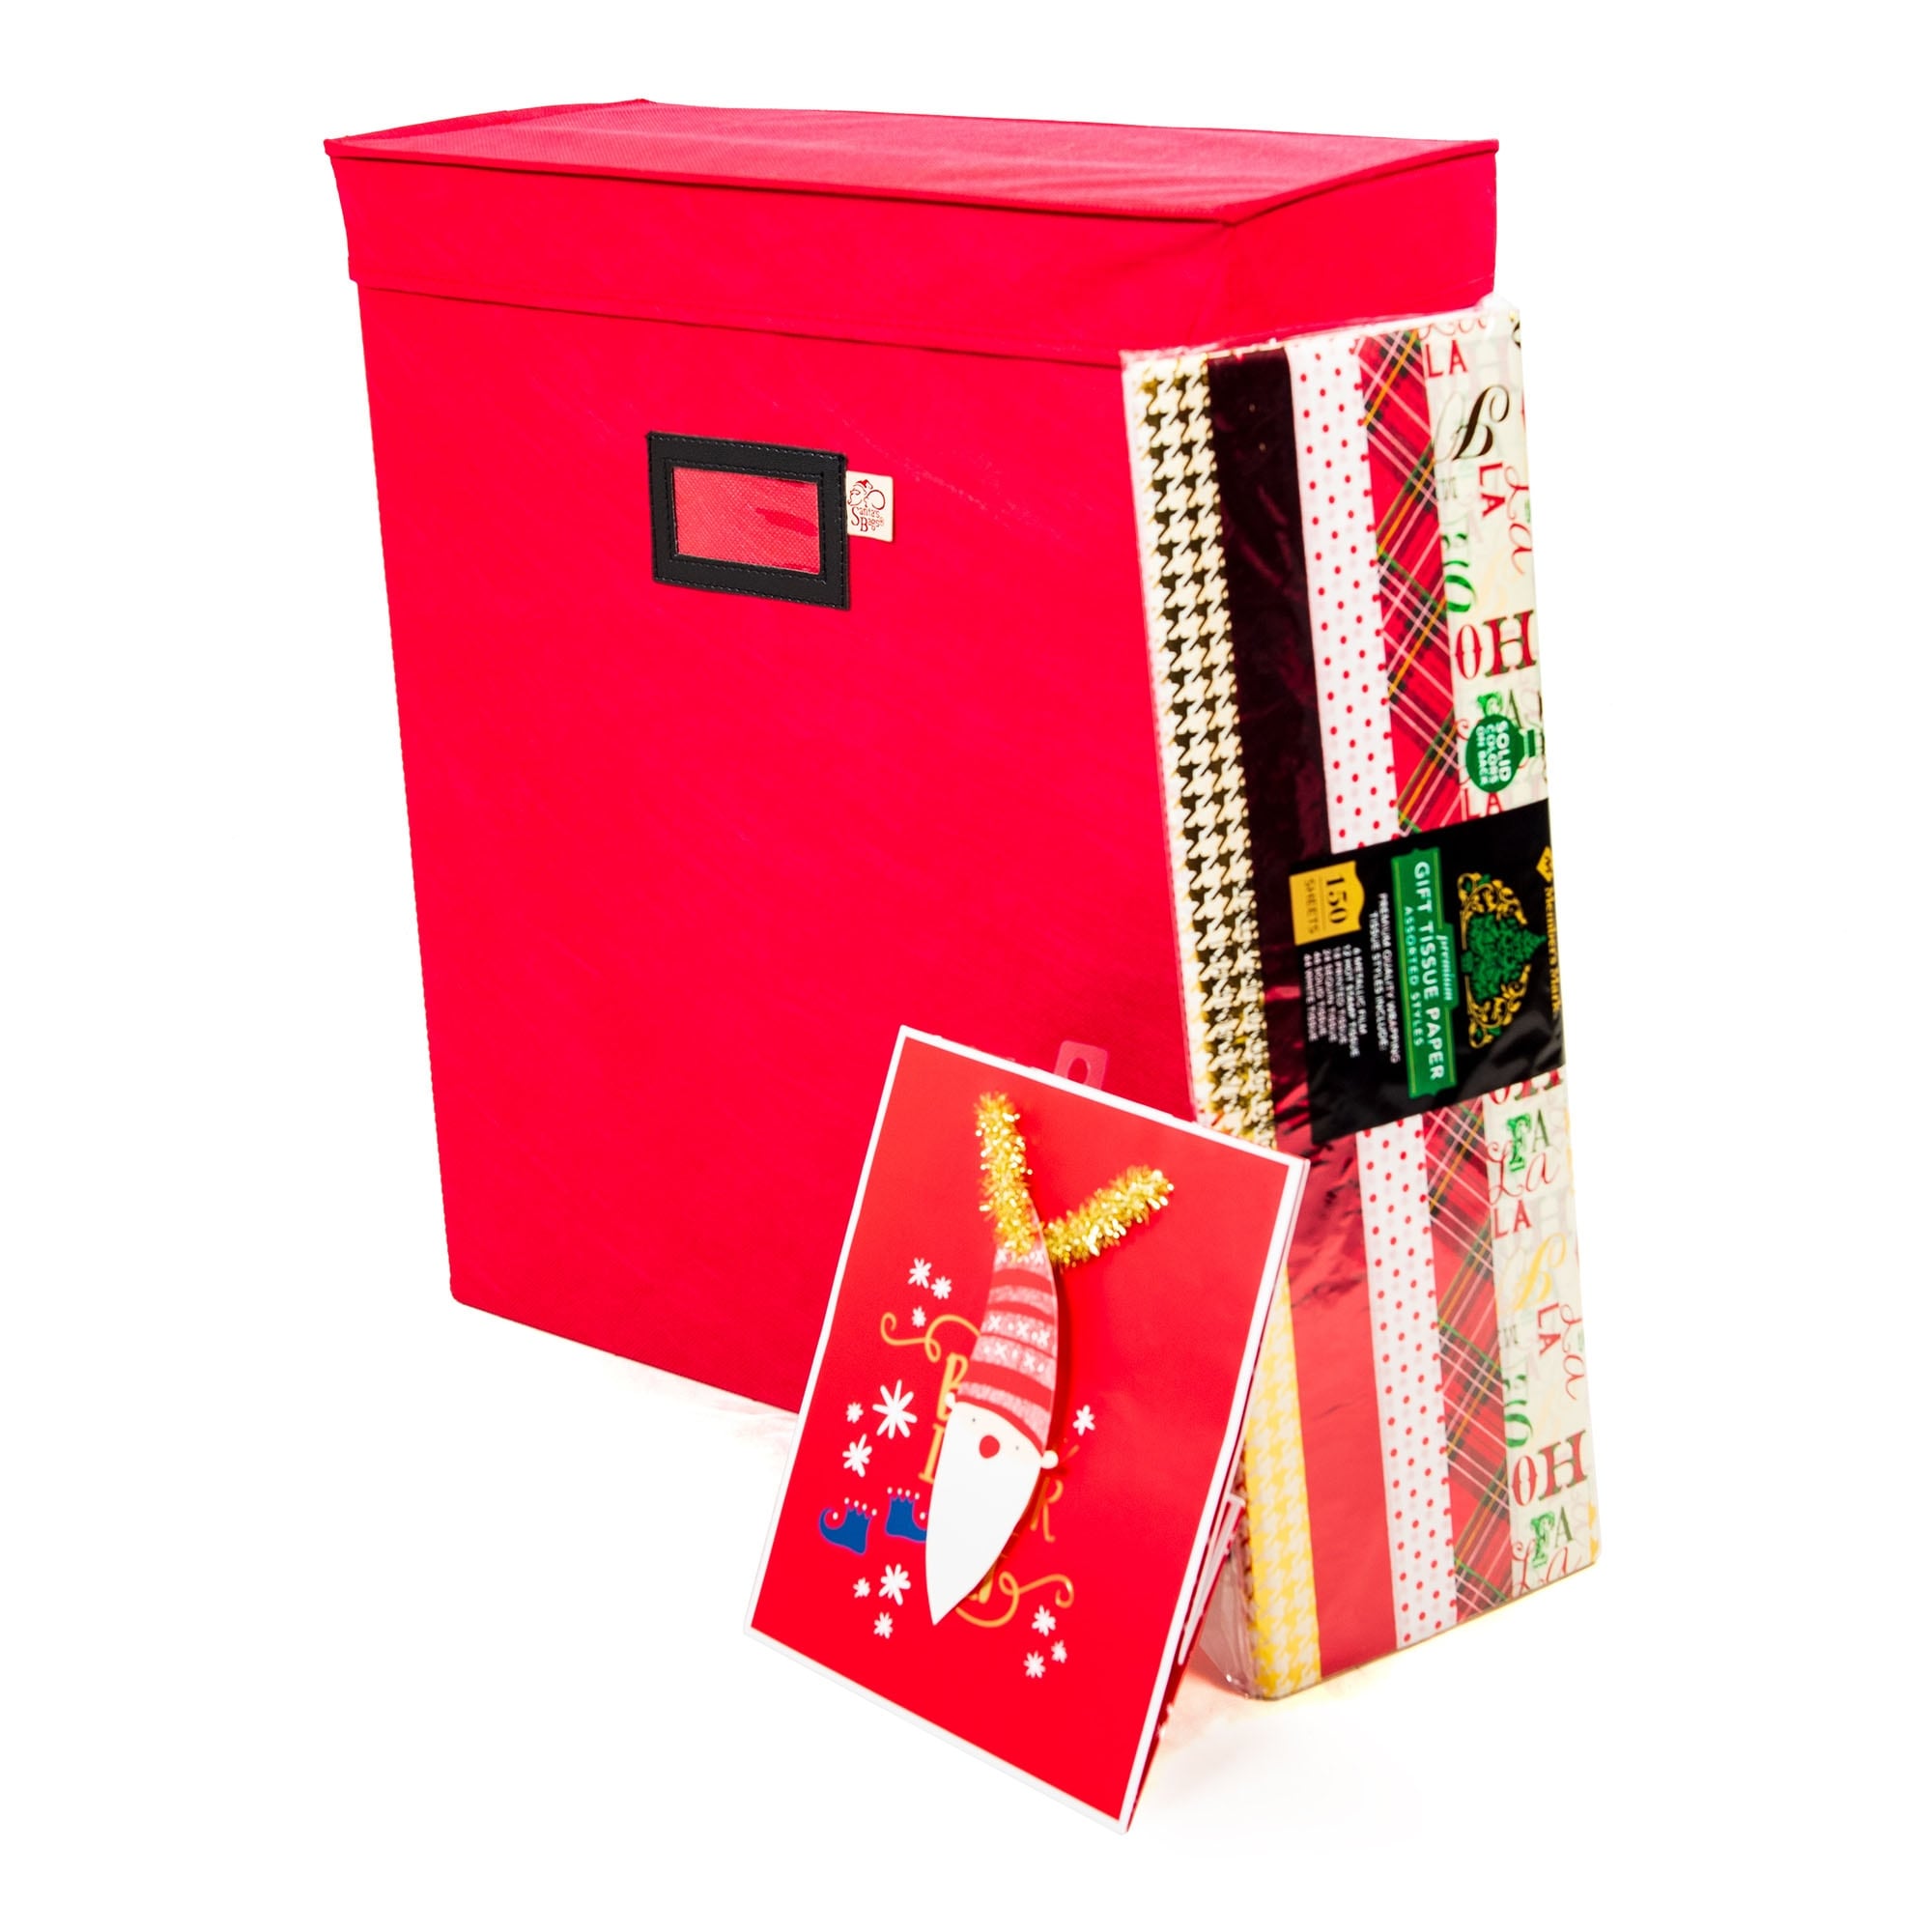 Hearth & Harbor Premium Christmas Wrapping Paper Storage Organizer